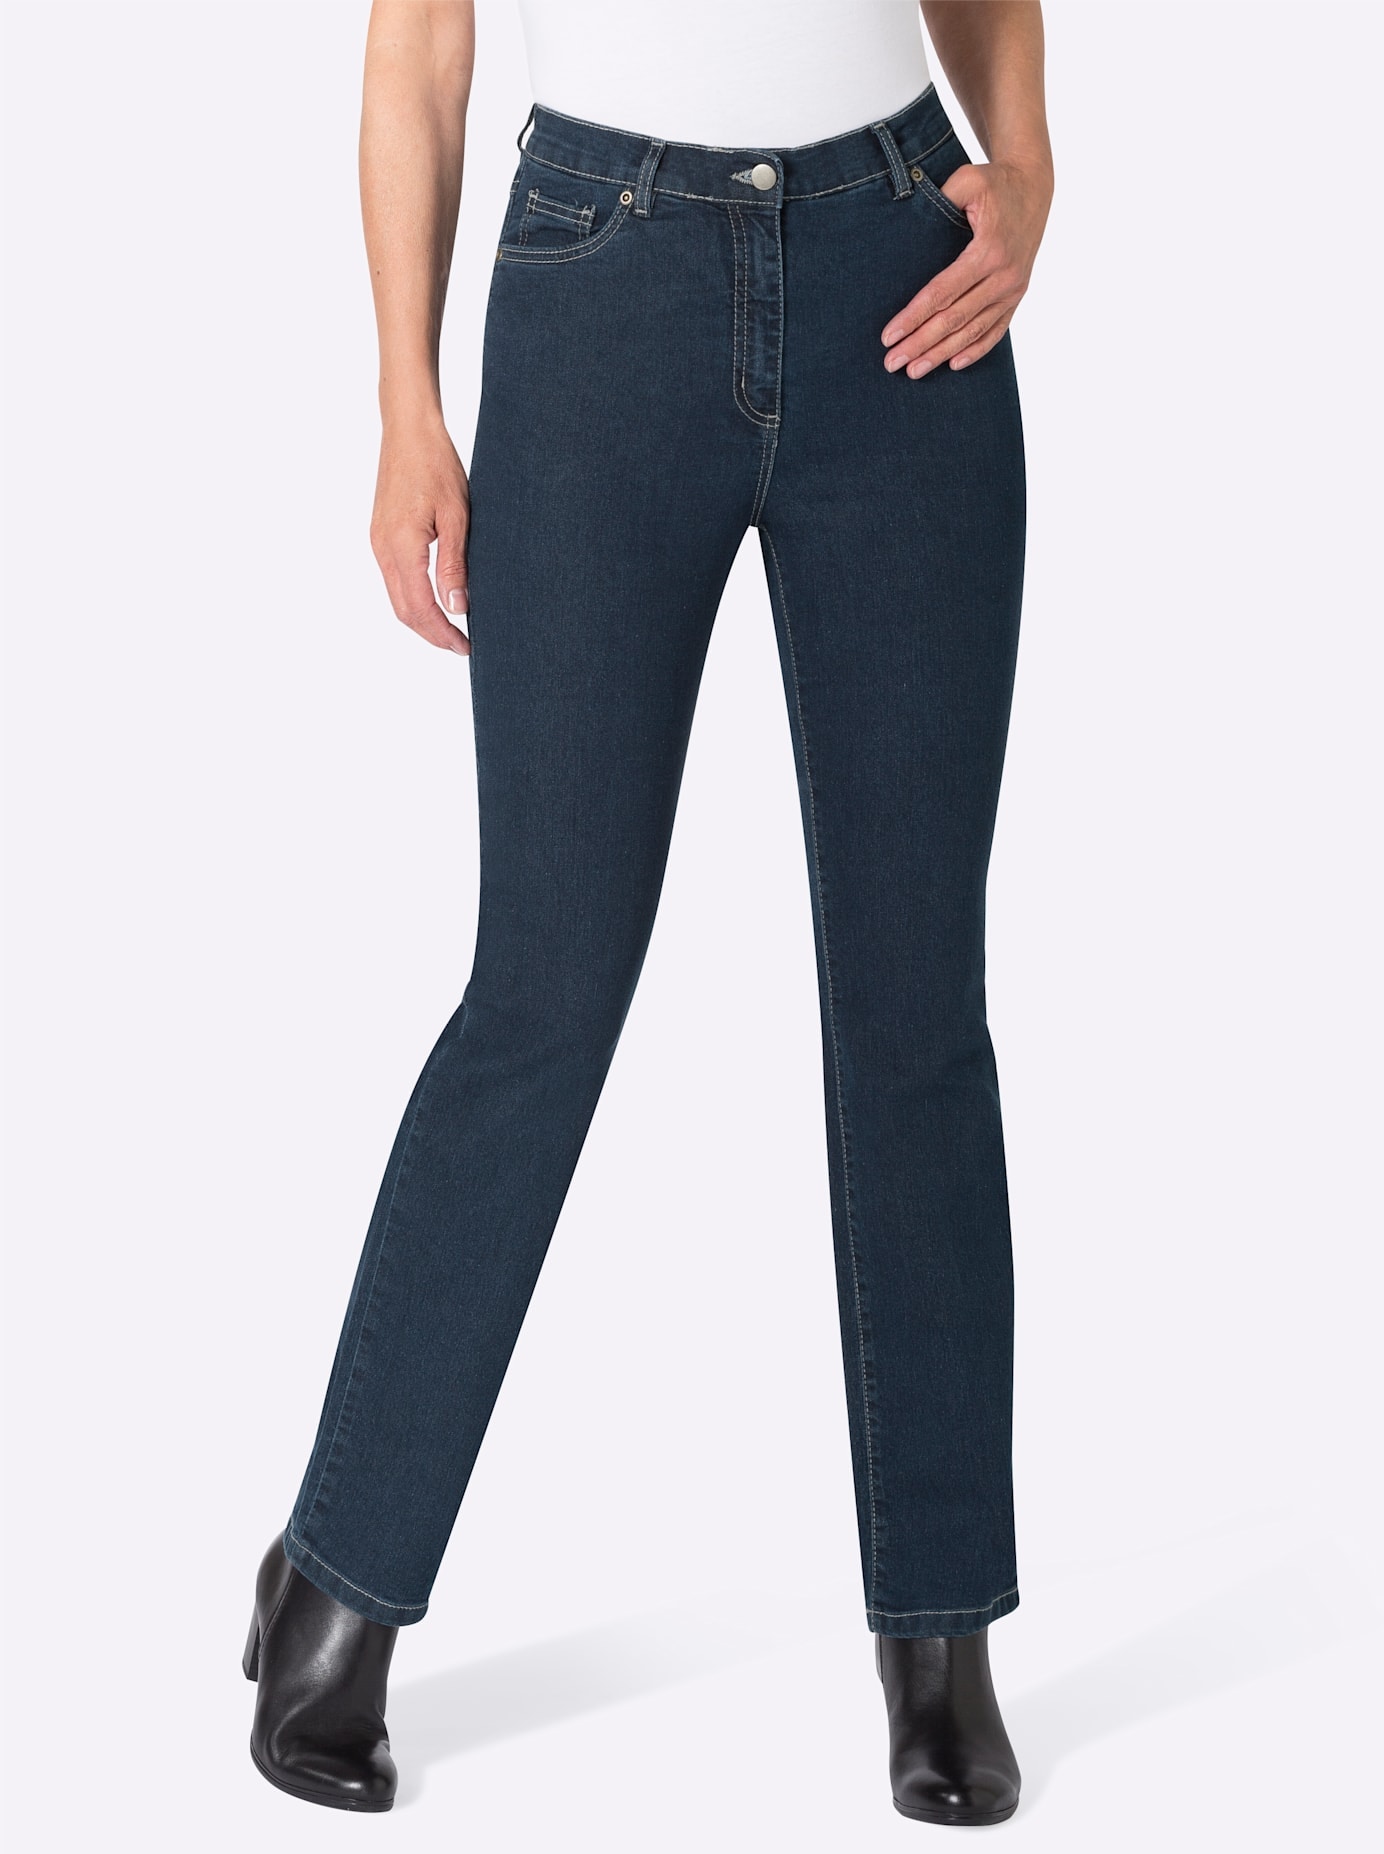 ♕ Classic Basics 5-Pocket-Jeans, versandkostenfrei tlg.) bestellen (1